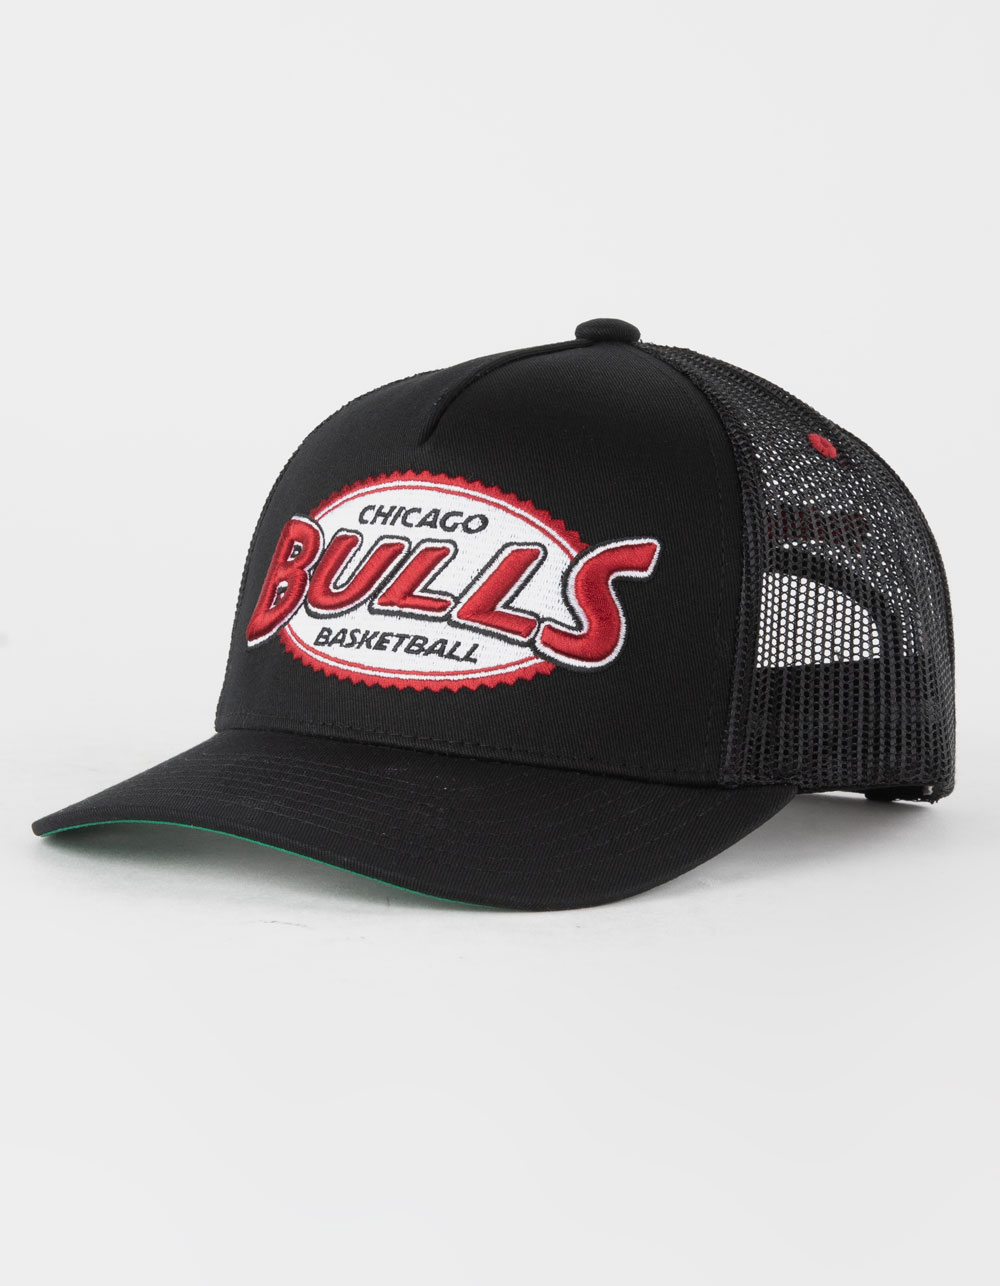 Mitchell & Ness Chicago Bulls Snapback Hat Cap Red/Grey Bottom